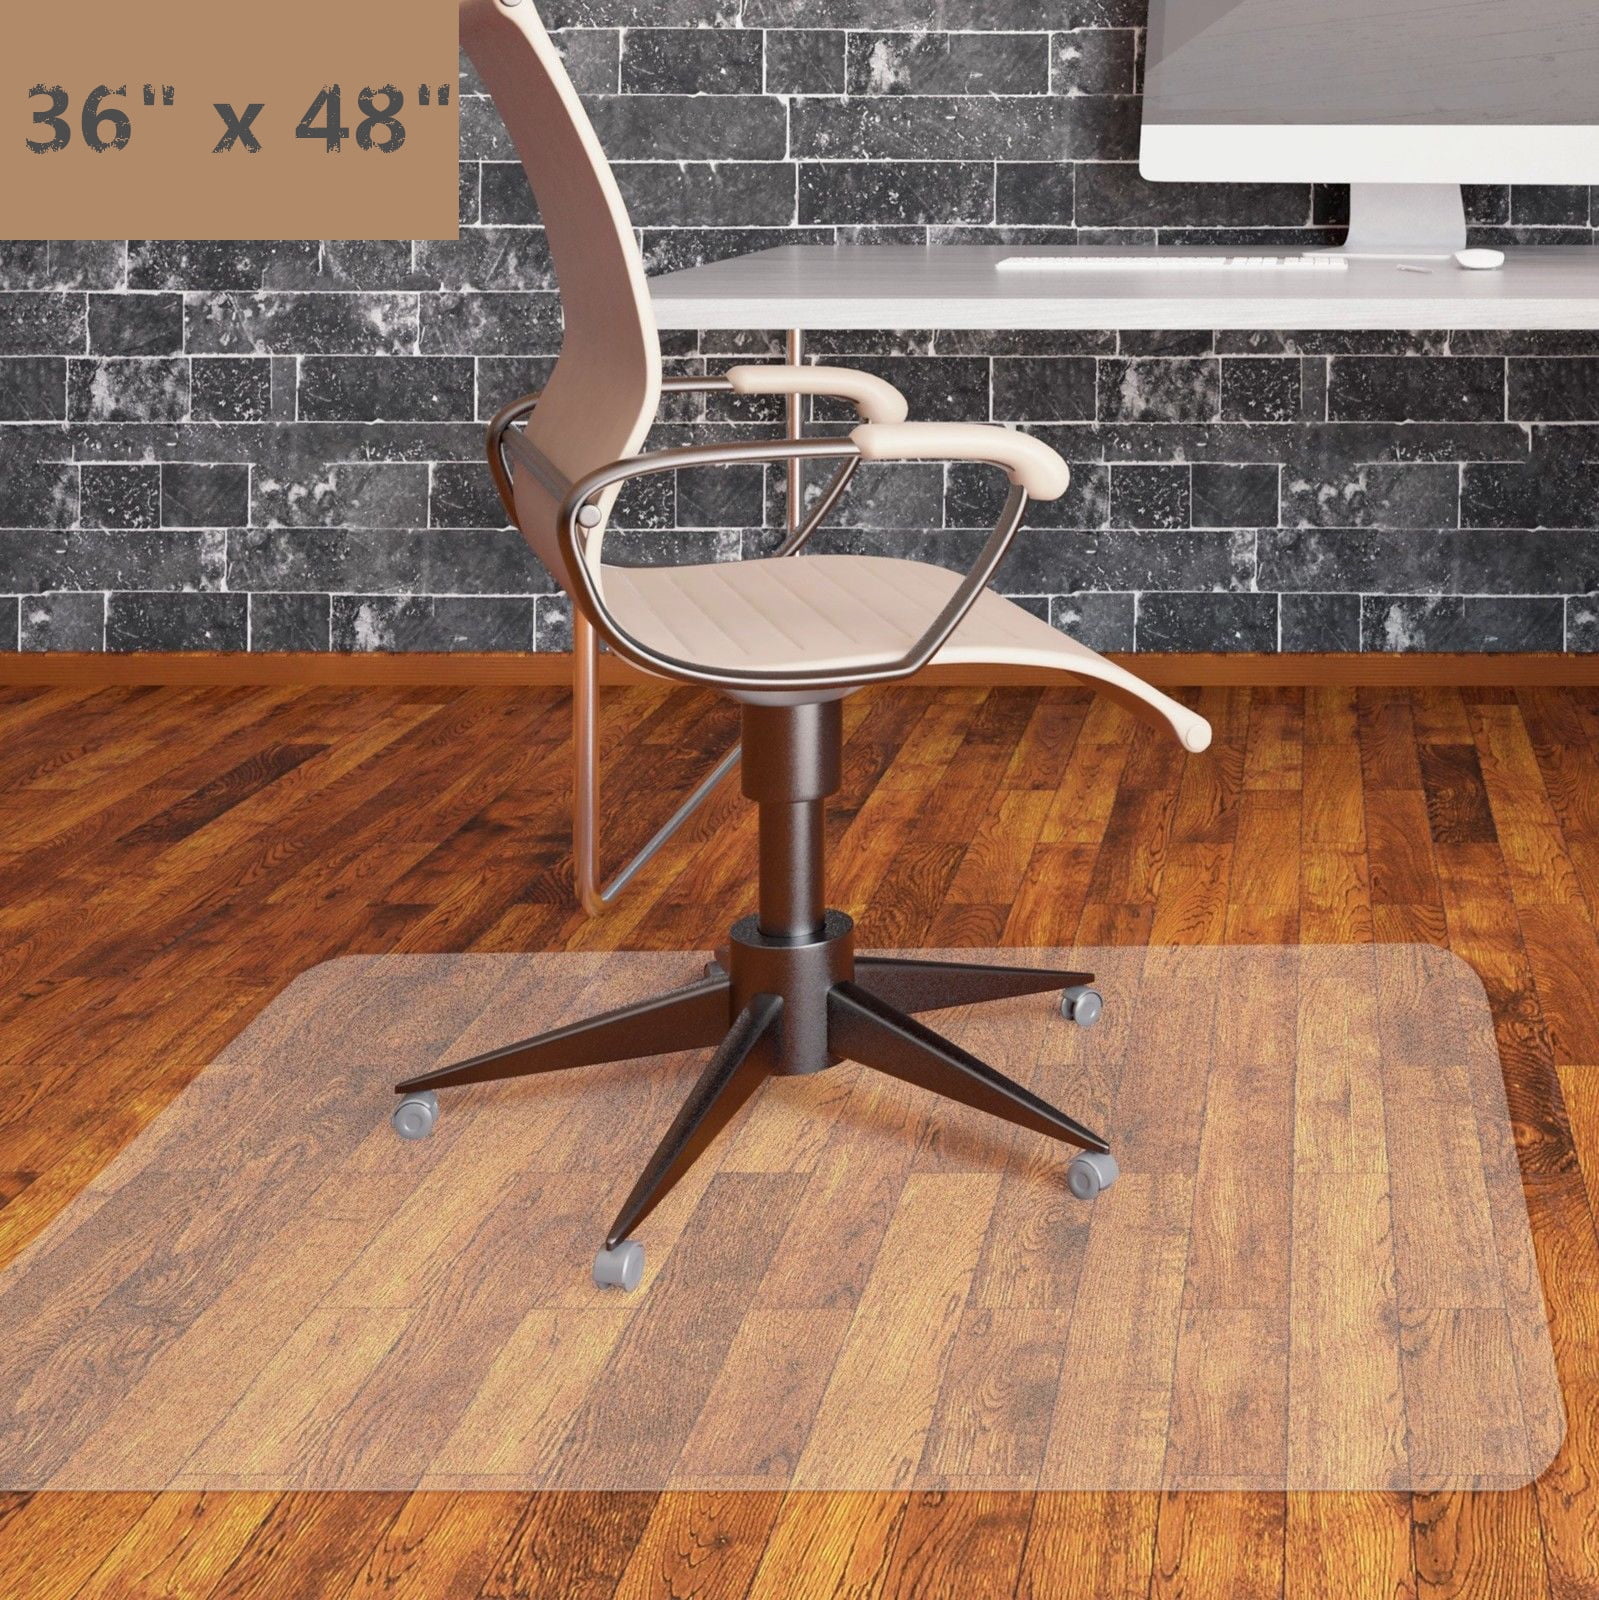 Computer Desk Chair Mat PVC Protector For Hardwood Floor Mat Home Office US 